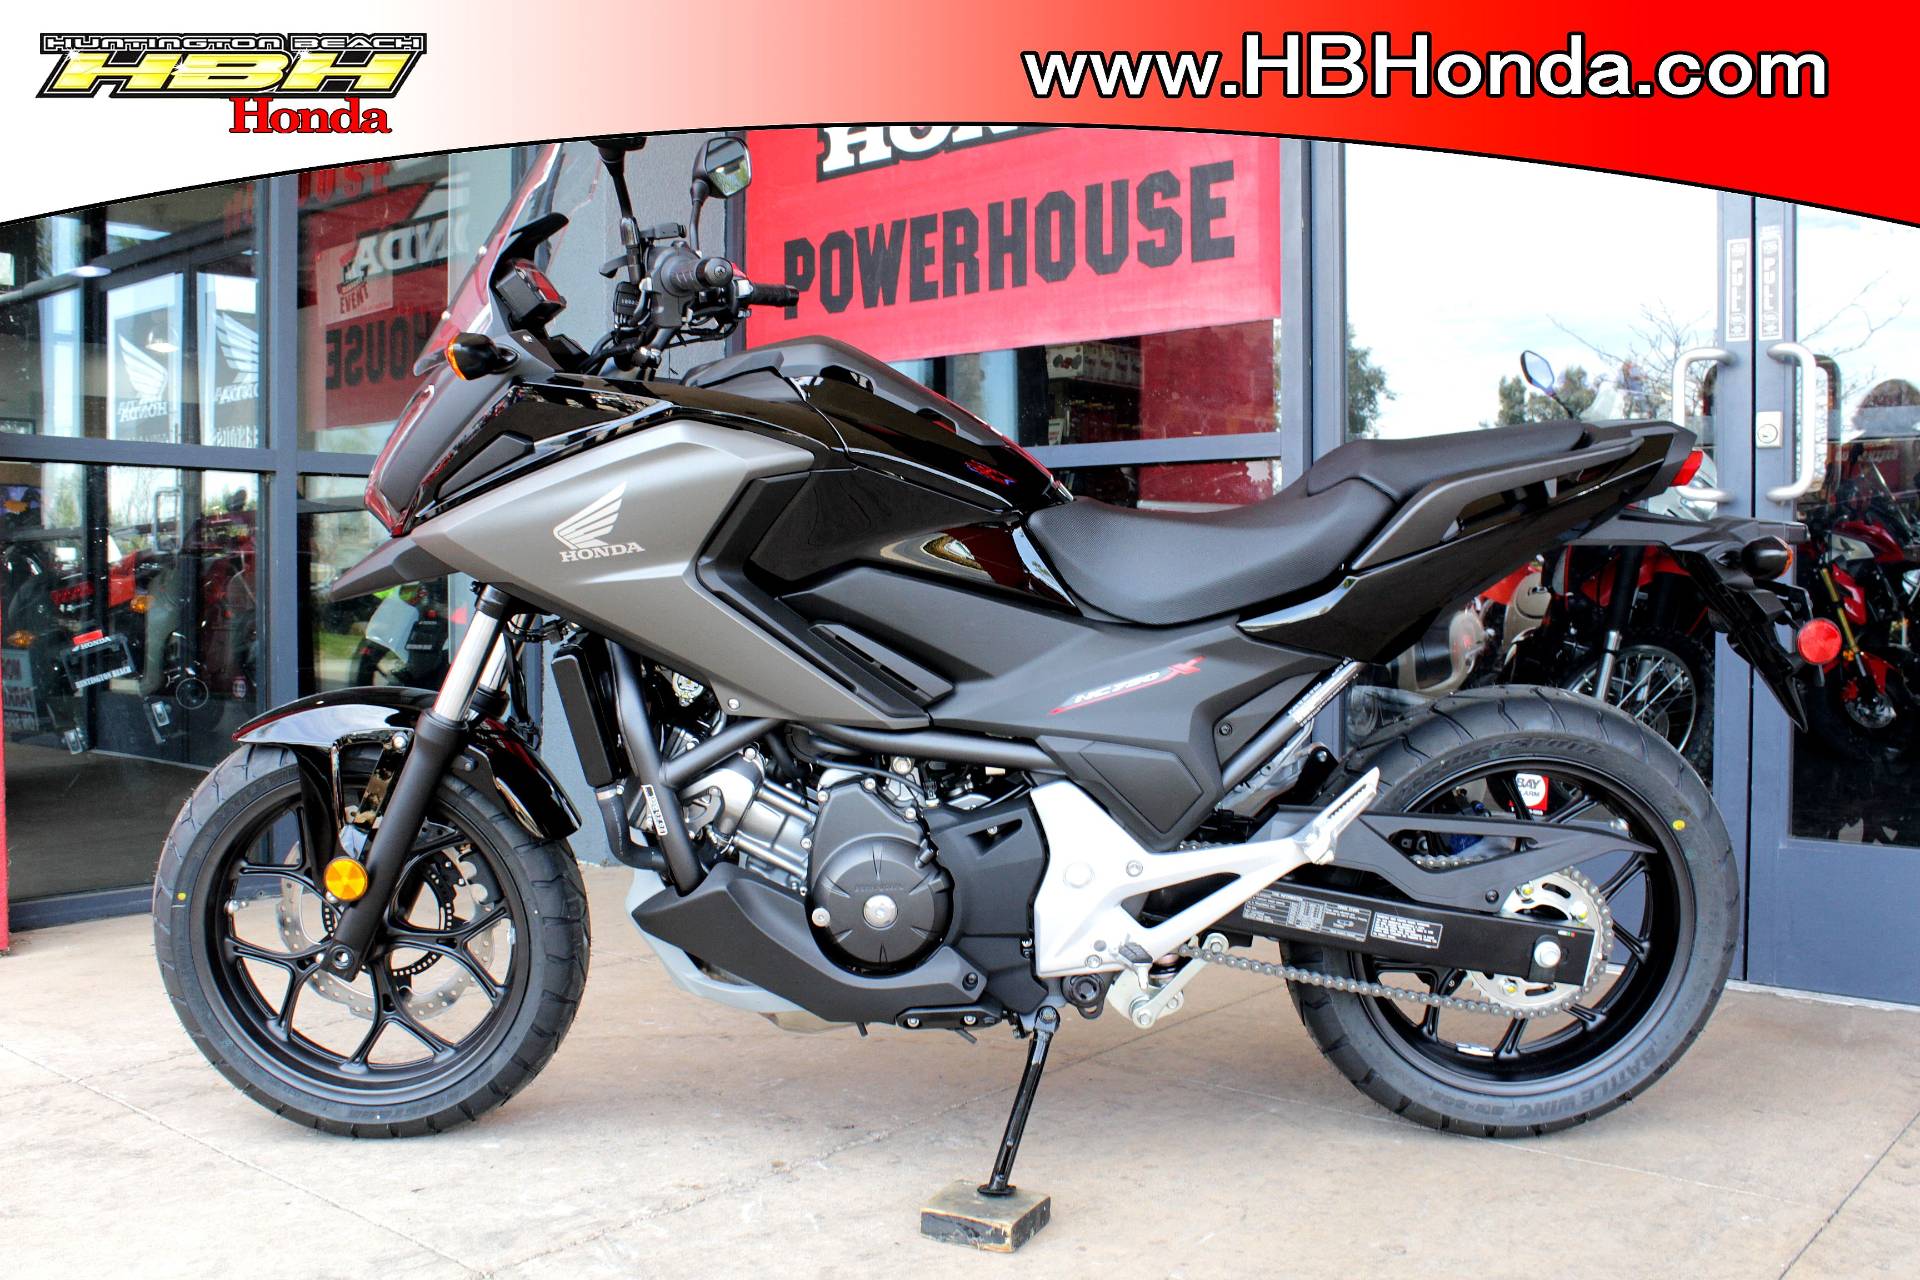 New Honda Nc750x Dct Abs For Sale Graphite Black Motorcycles In Huntington Beach Ca Huntington Beach Honda M2936 0050